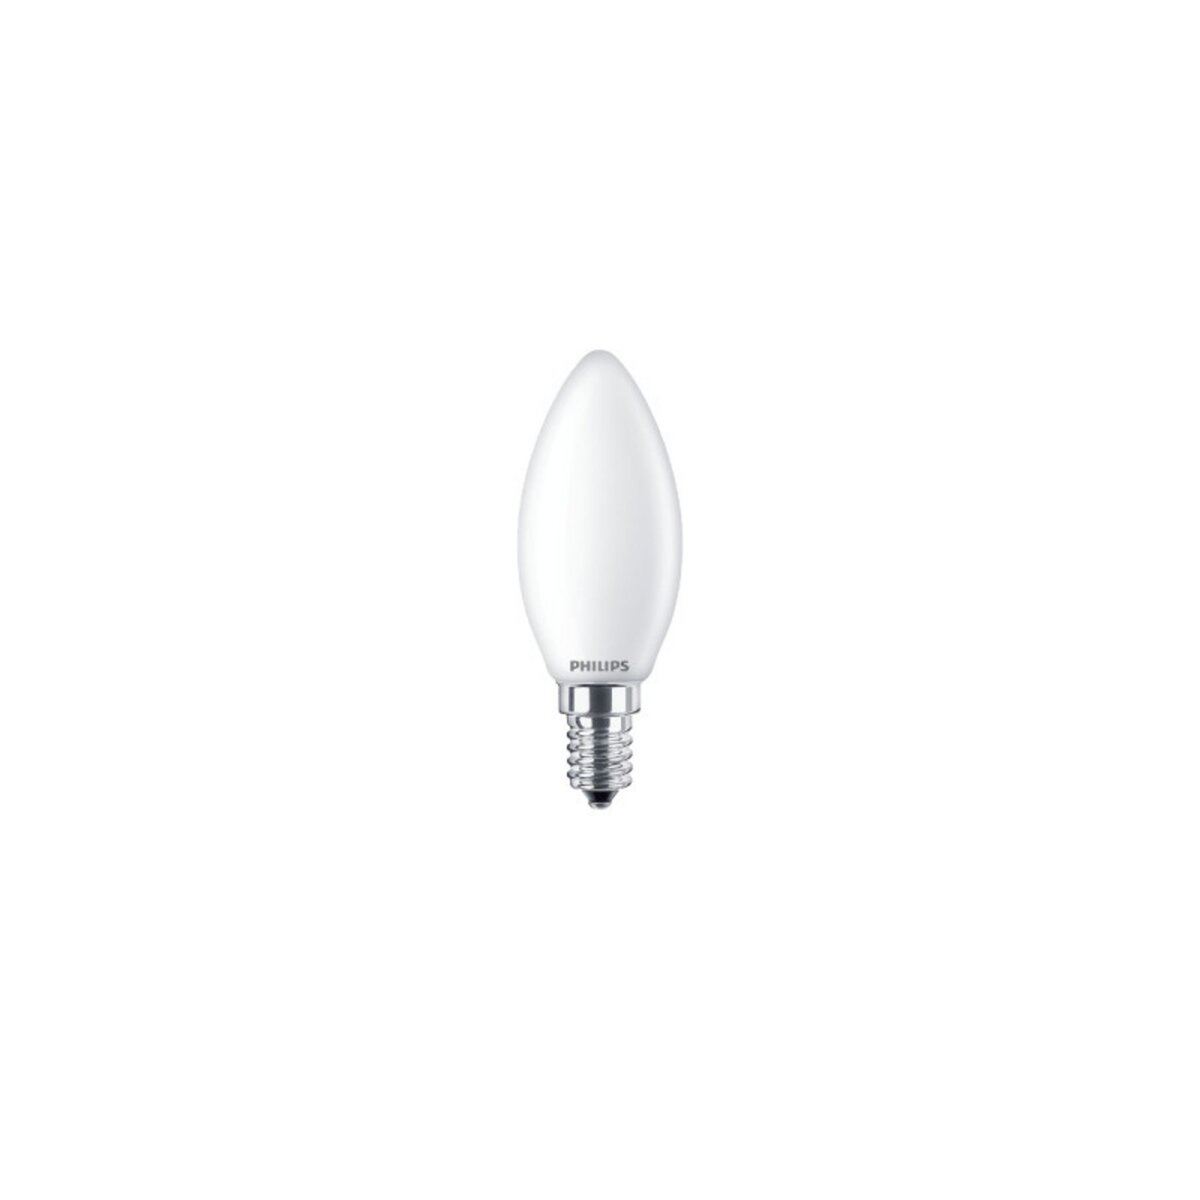 Philips Ampoule LED bougie PHILIPS - EyeComfort - 4,3W - 470 lumens - 6500K - E14 - 93008